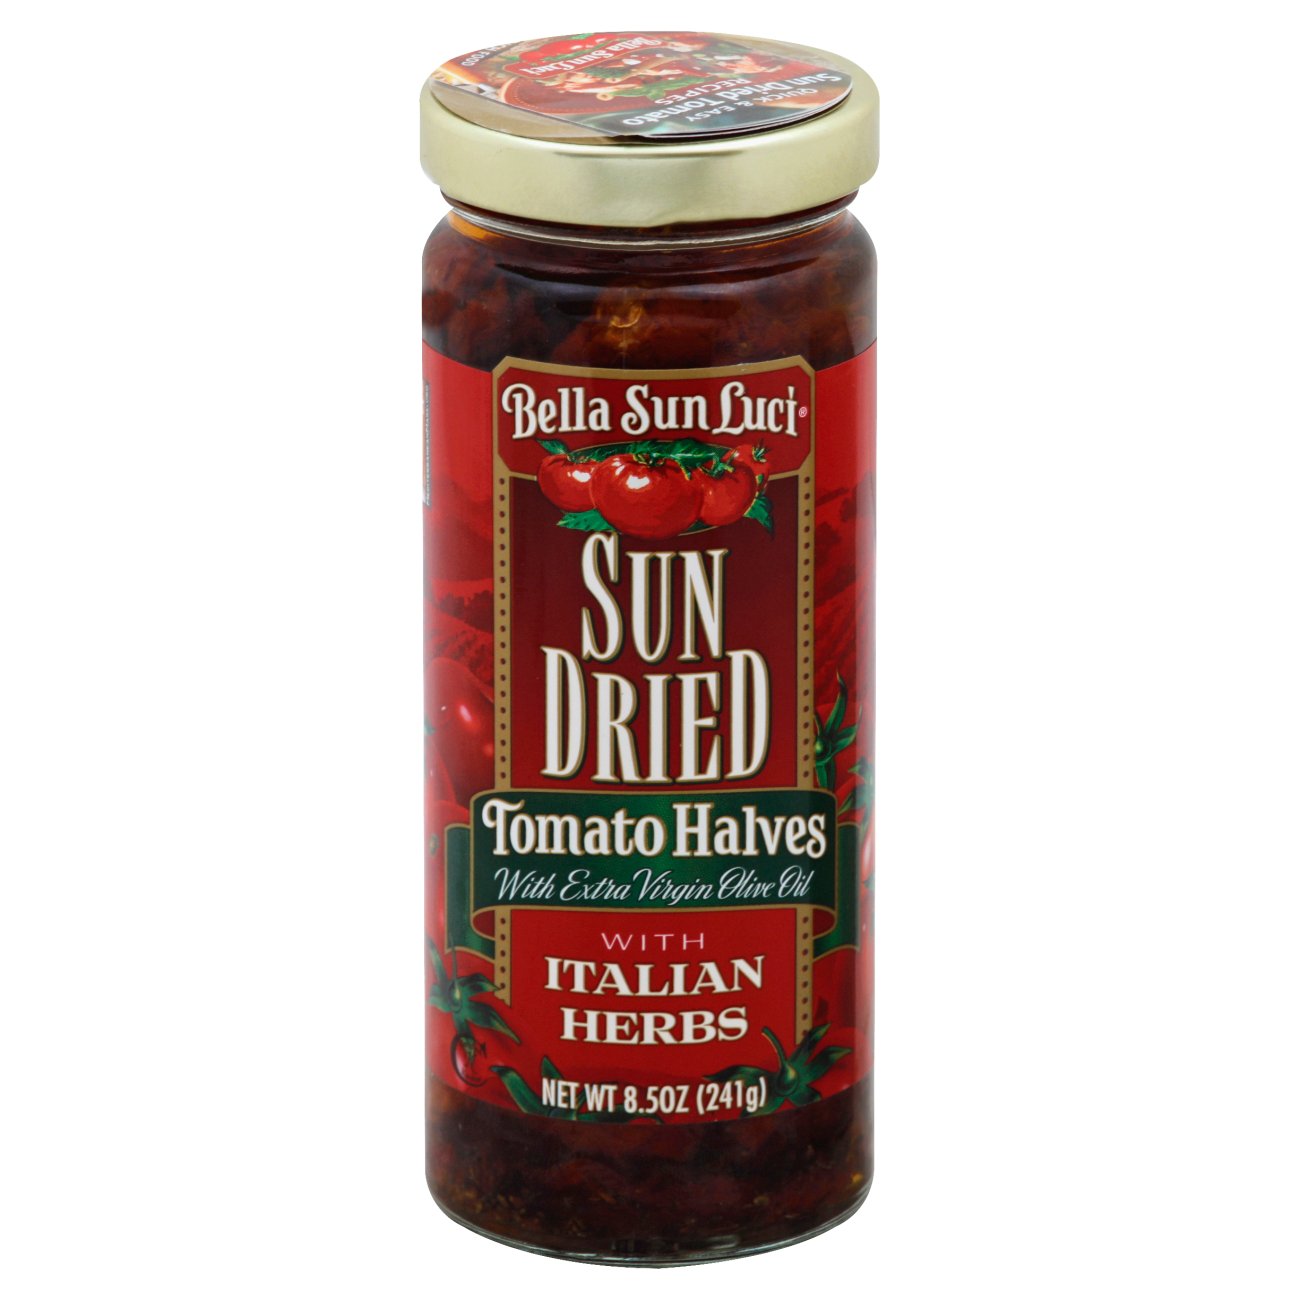 Bella Sun Luci Tomato Halves, with Italian Herbs, Sun-Dried - Shop Tomatoes  at H-E-B